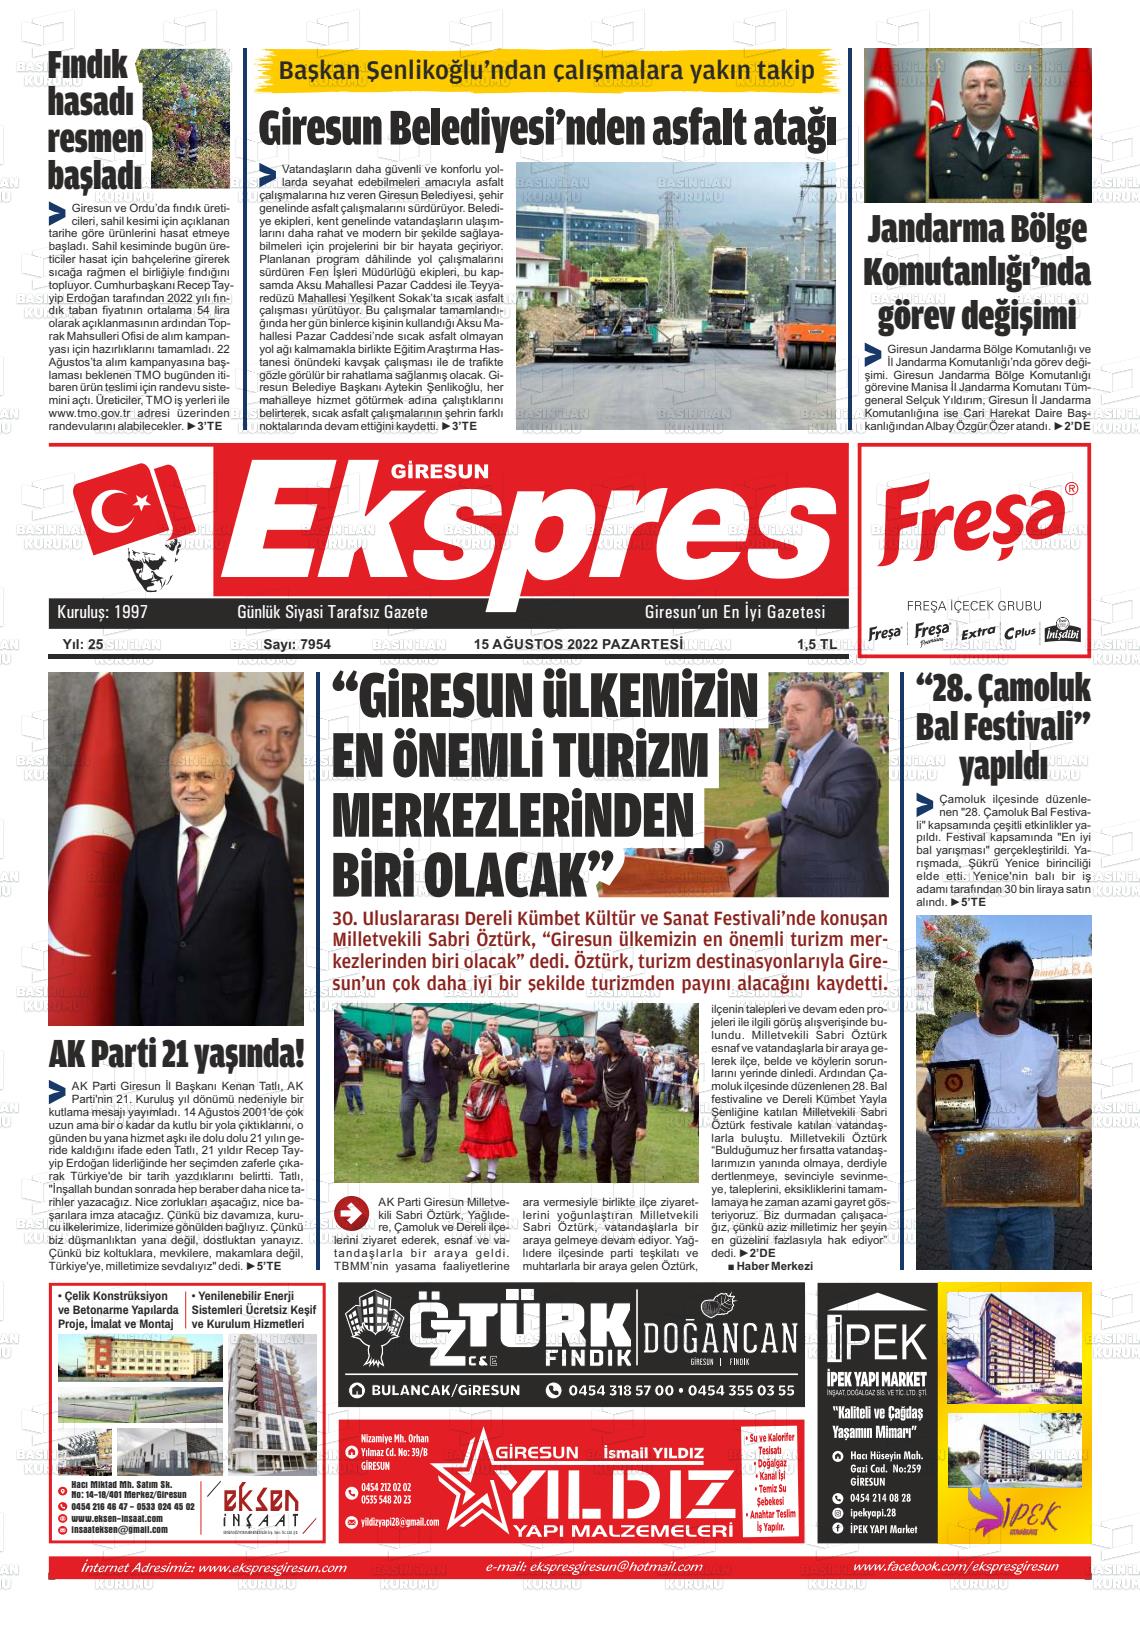 15 Ağustos 2022 Giresun Ekspres Gazete Manşeti